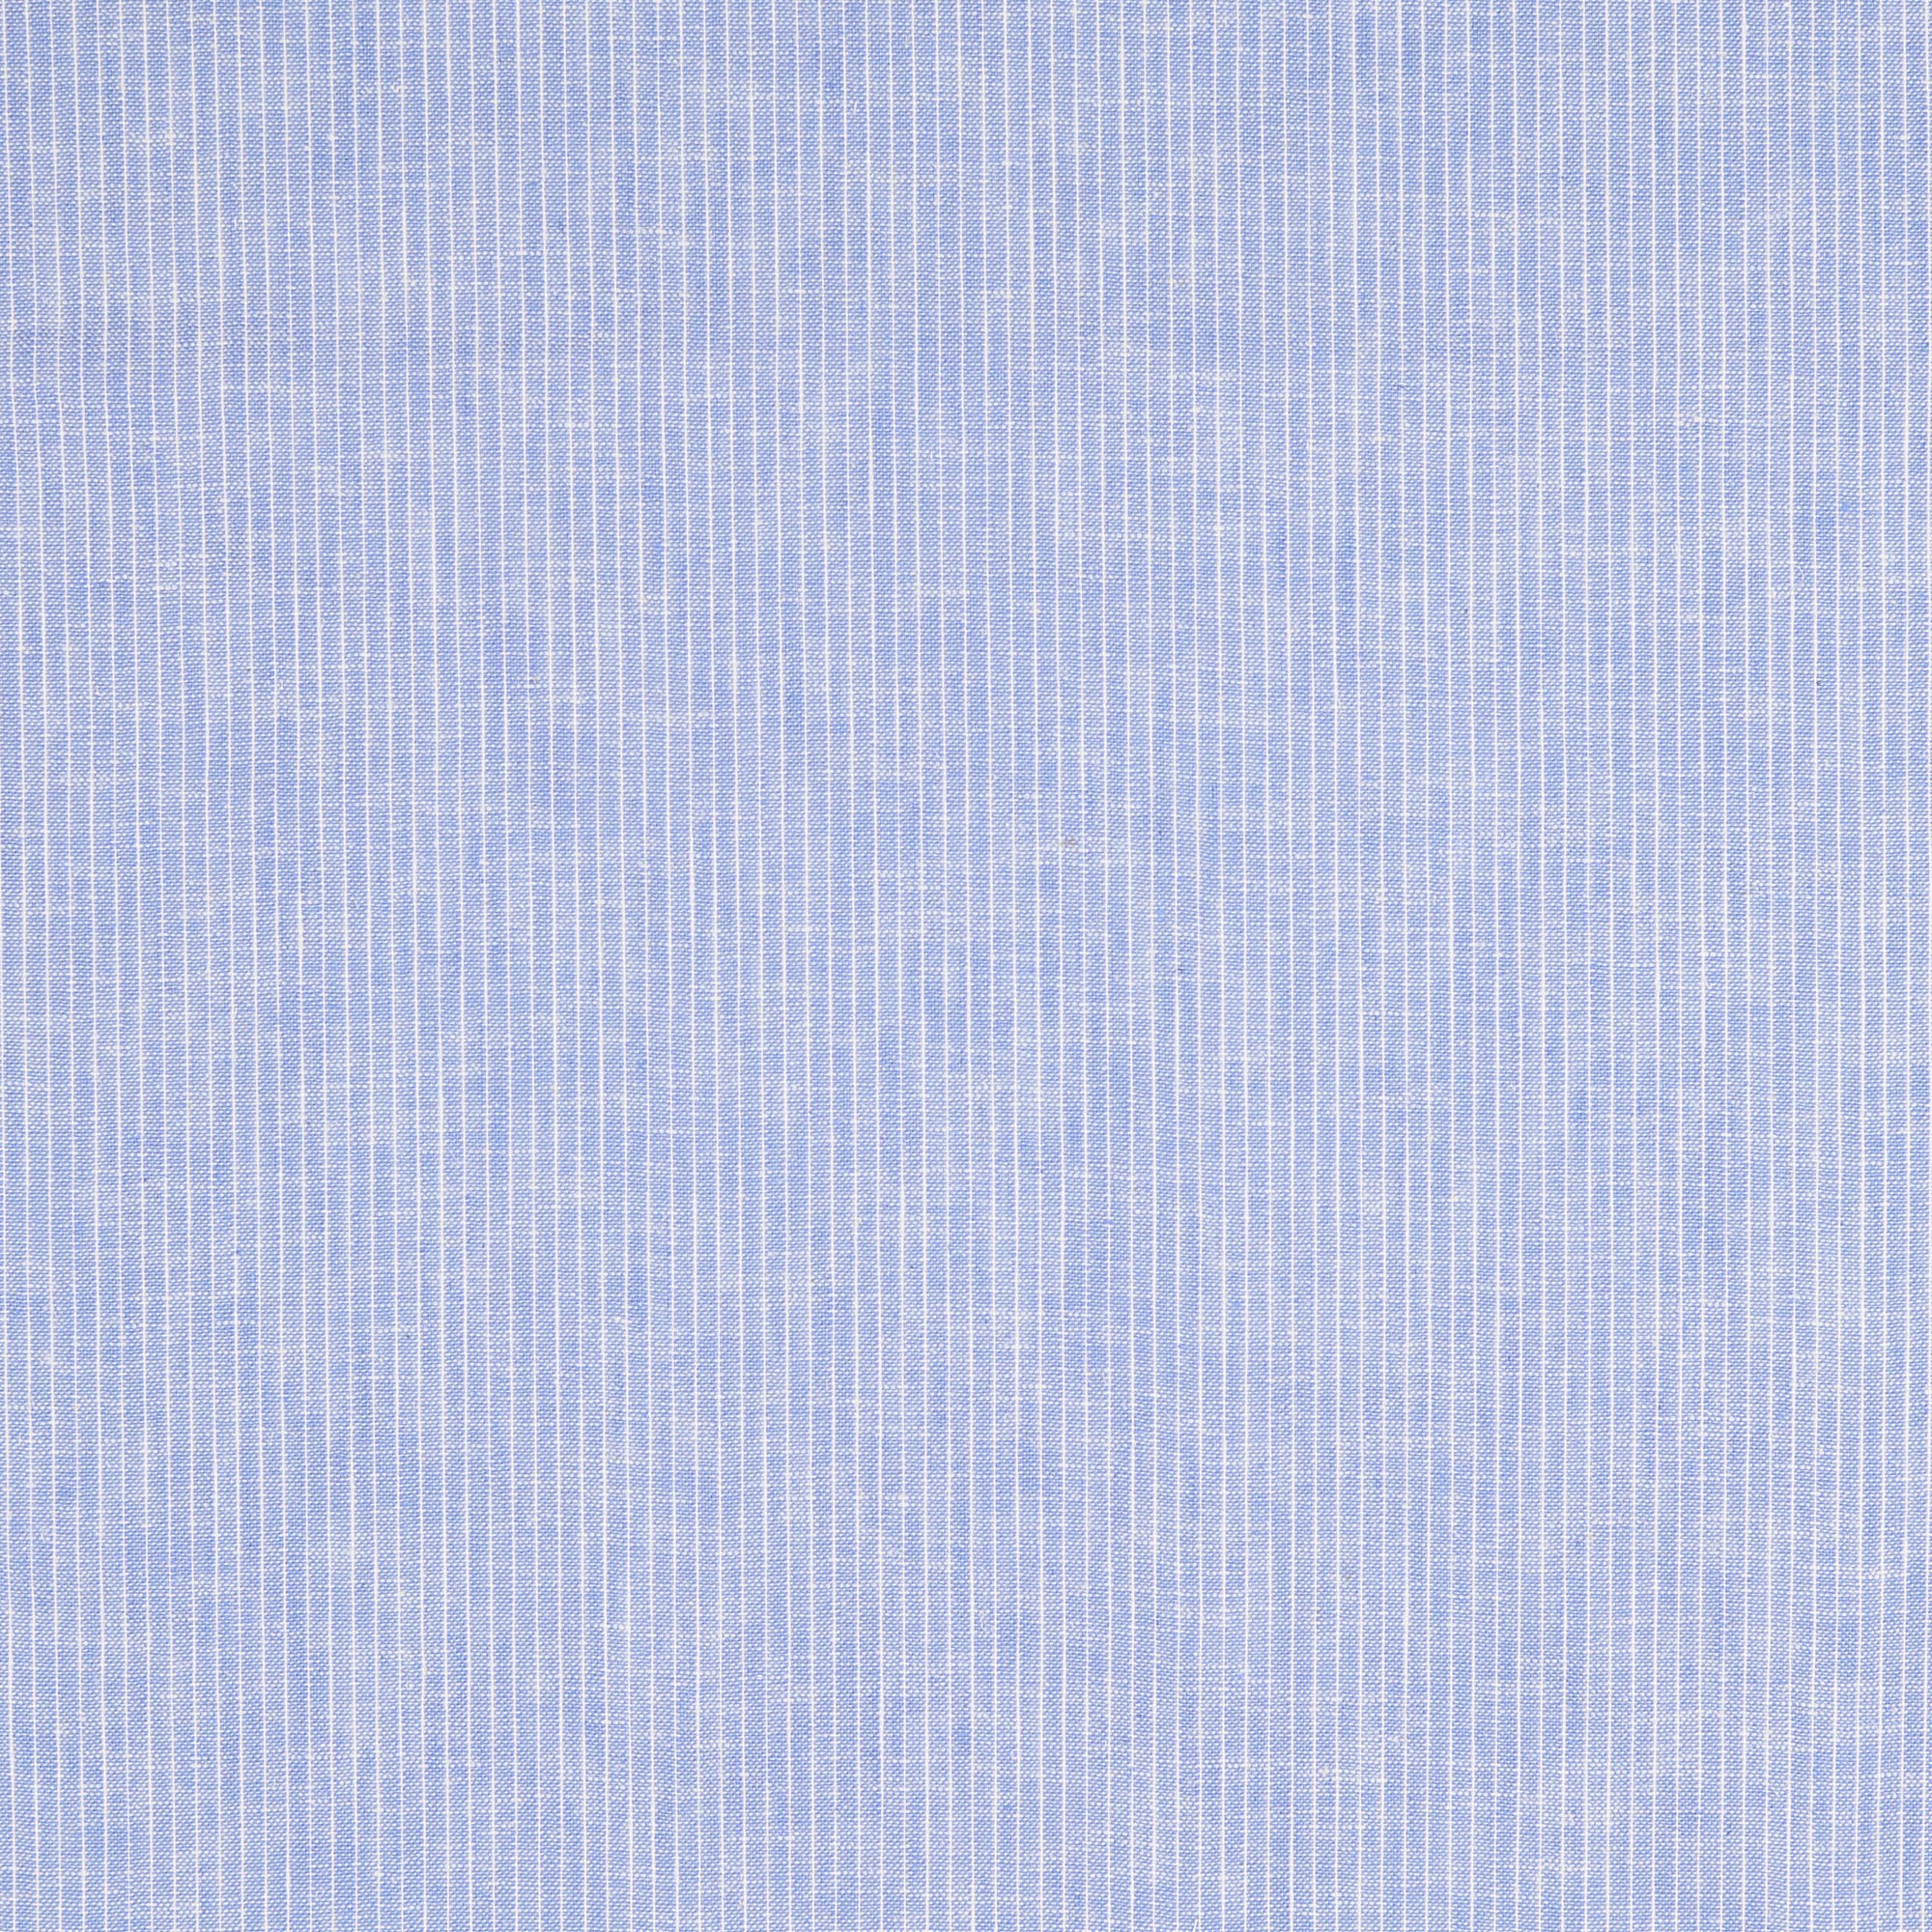 Fine Stripe Blue Linen Cotton Fabric